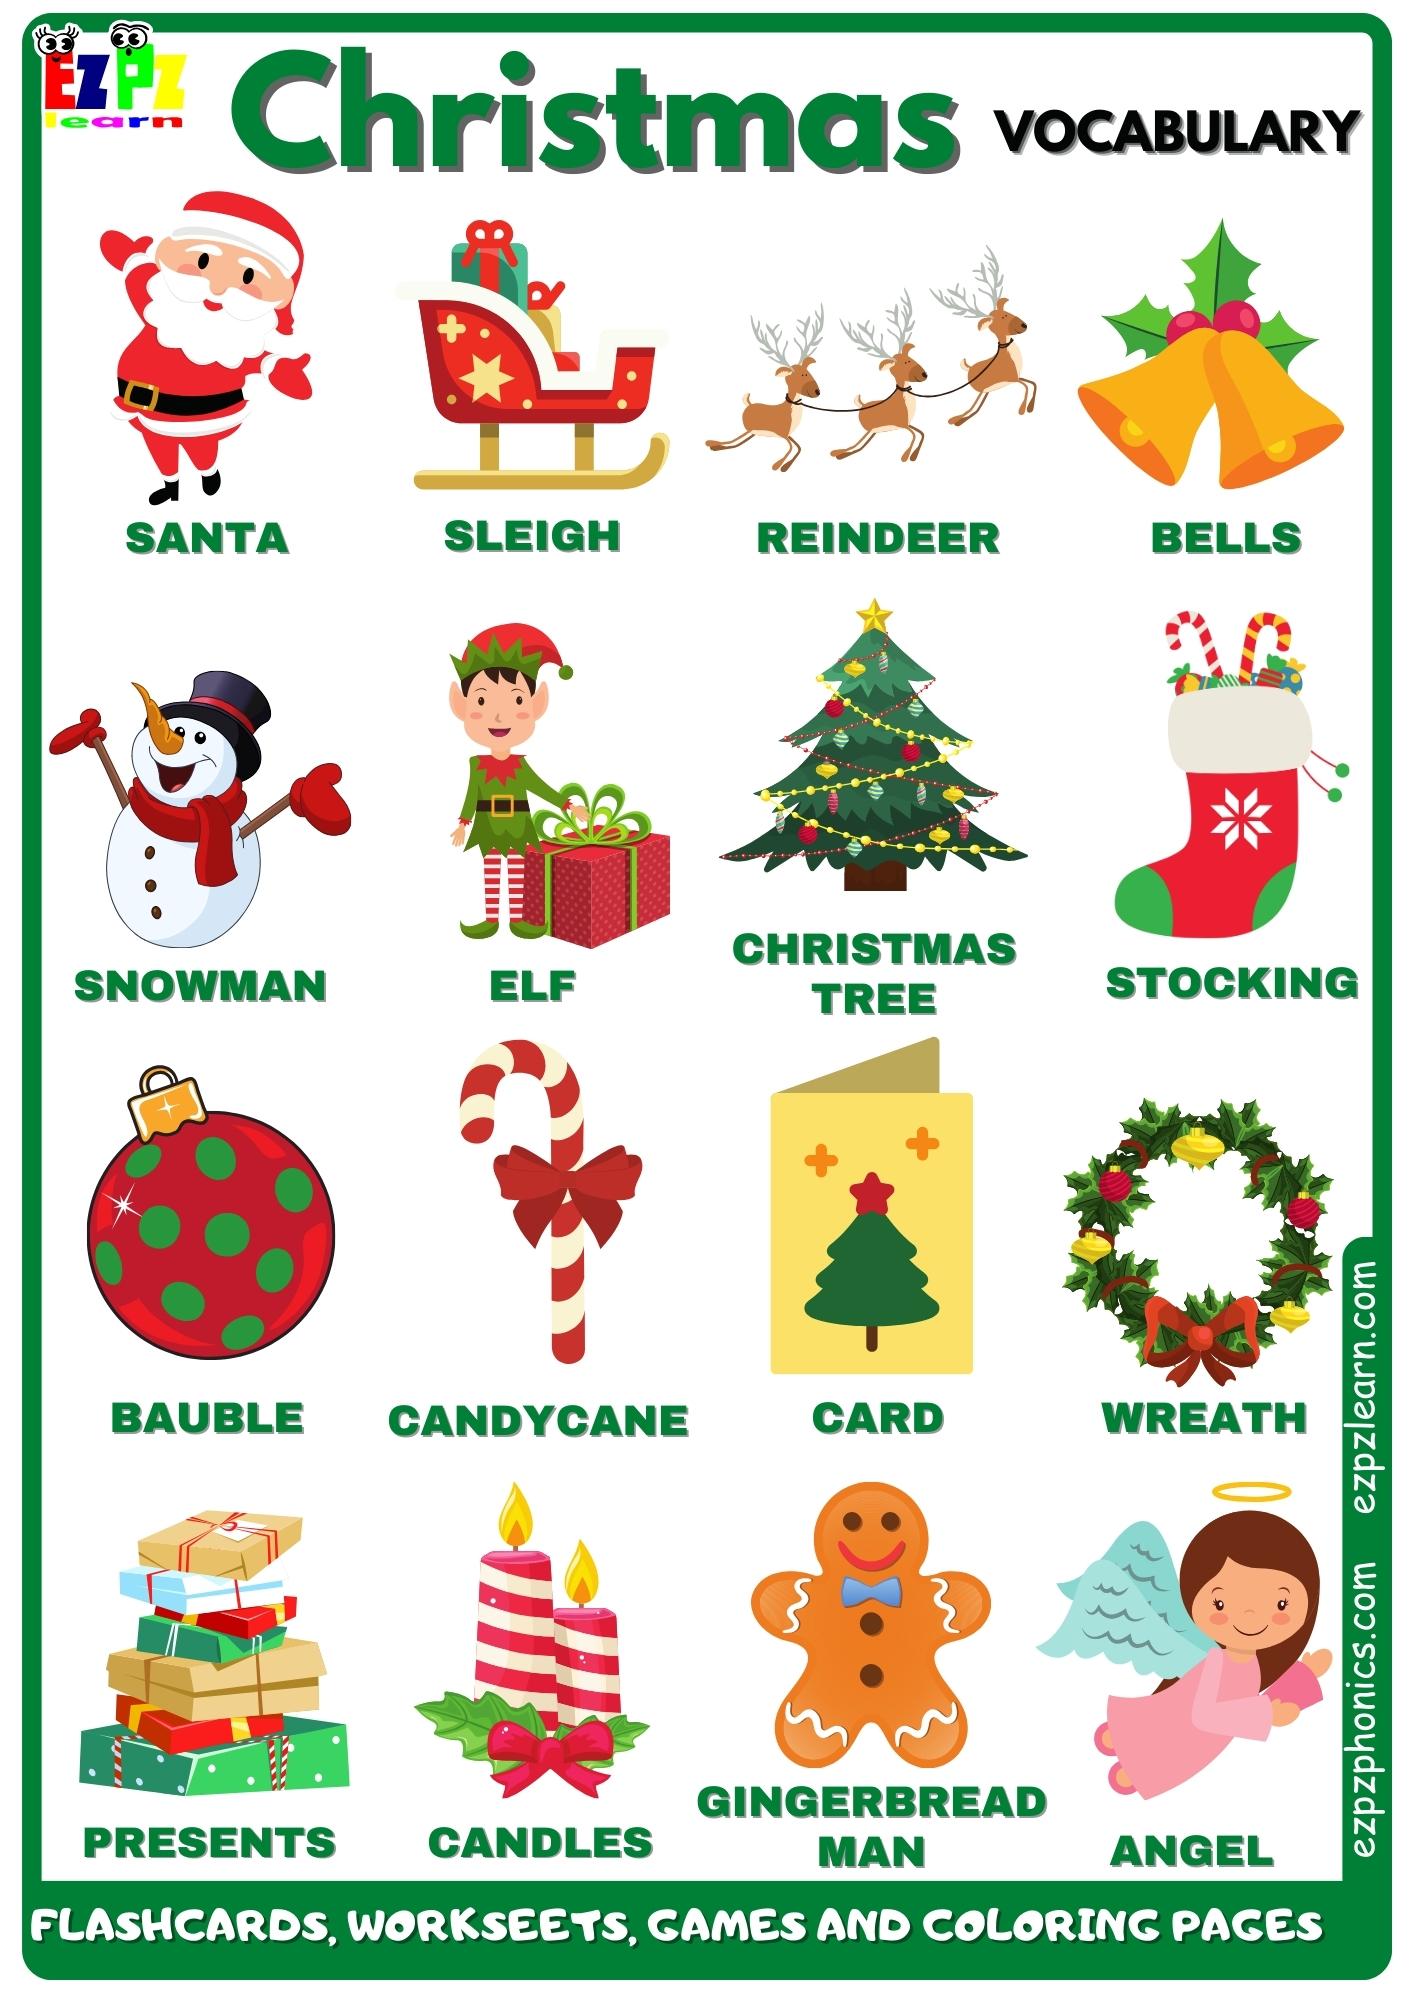 Christmas Vocabulary Free English Vocabulary Resources Flashcards ...